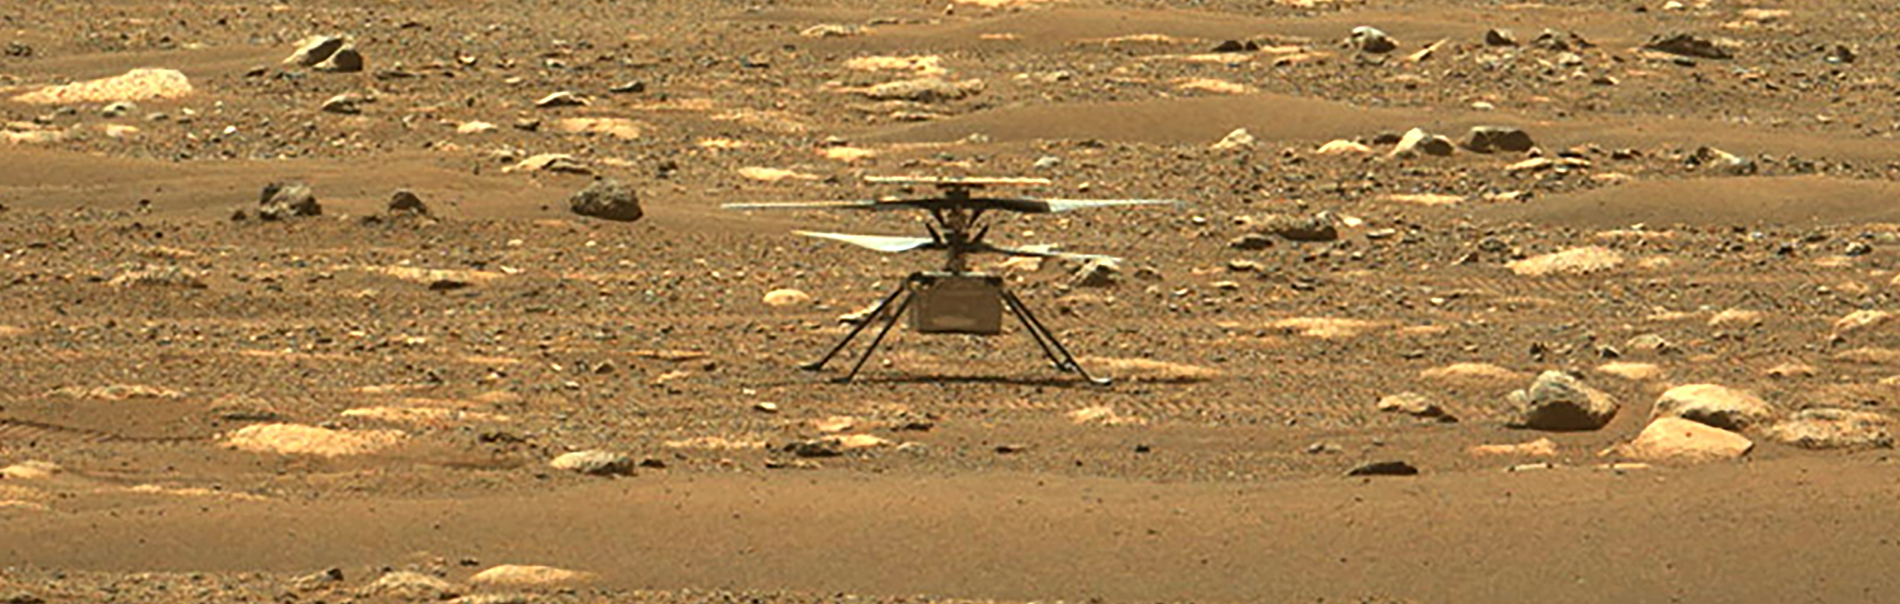 NASA Ingenuity Mars helicopter